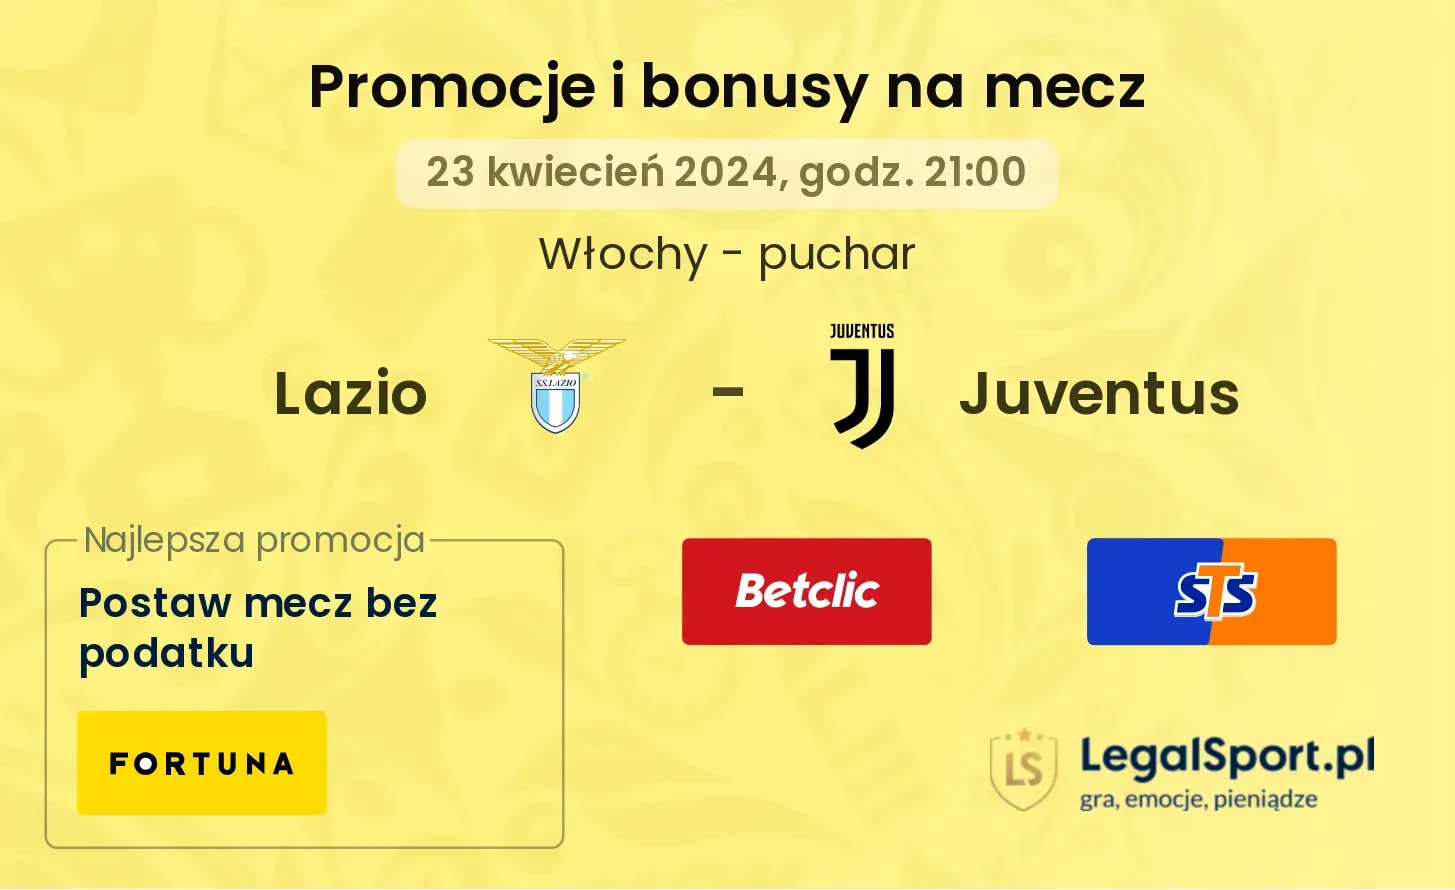 Lazio - Juventus promocje bonusy na mecz